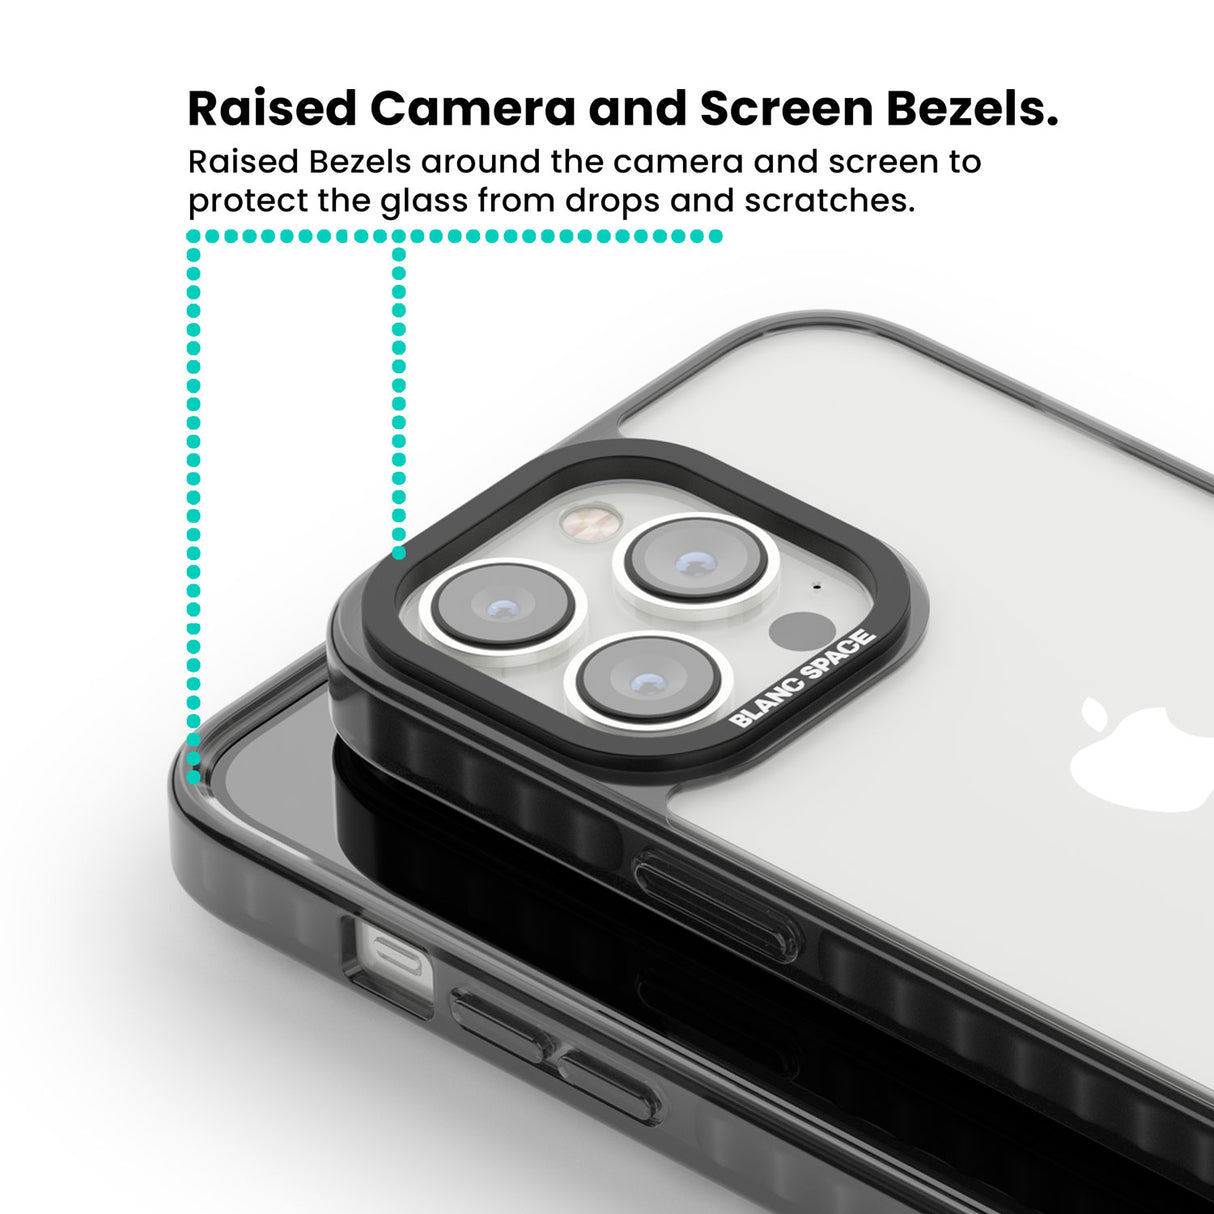 Vibrant Clear Geometric Grid Black Impact Phone Case for iPhone 13 Pro, iPhone 14 Pro, iPhone 15 Pro